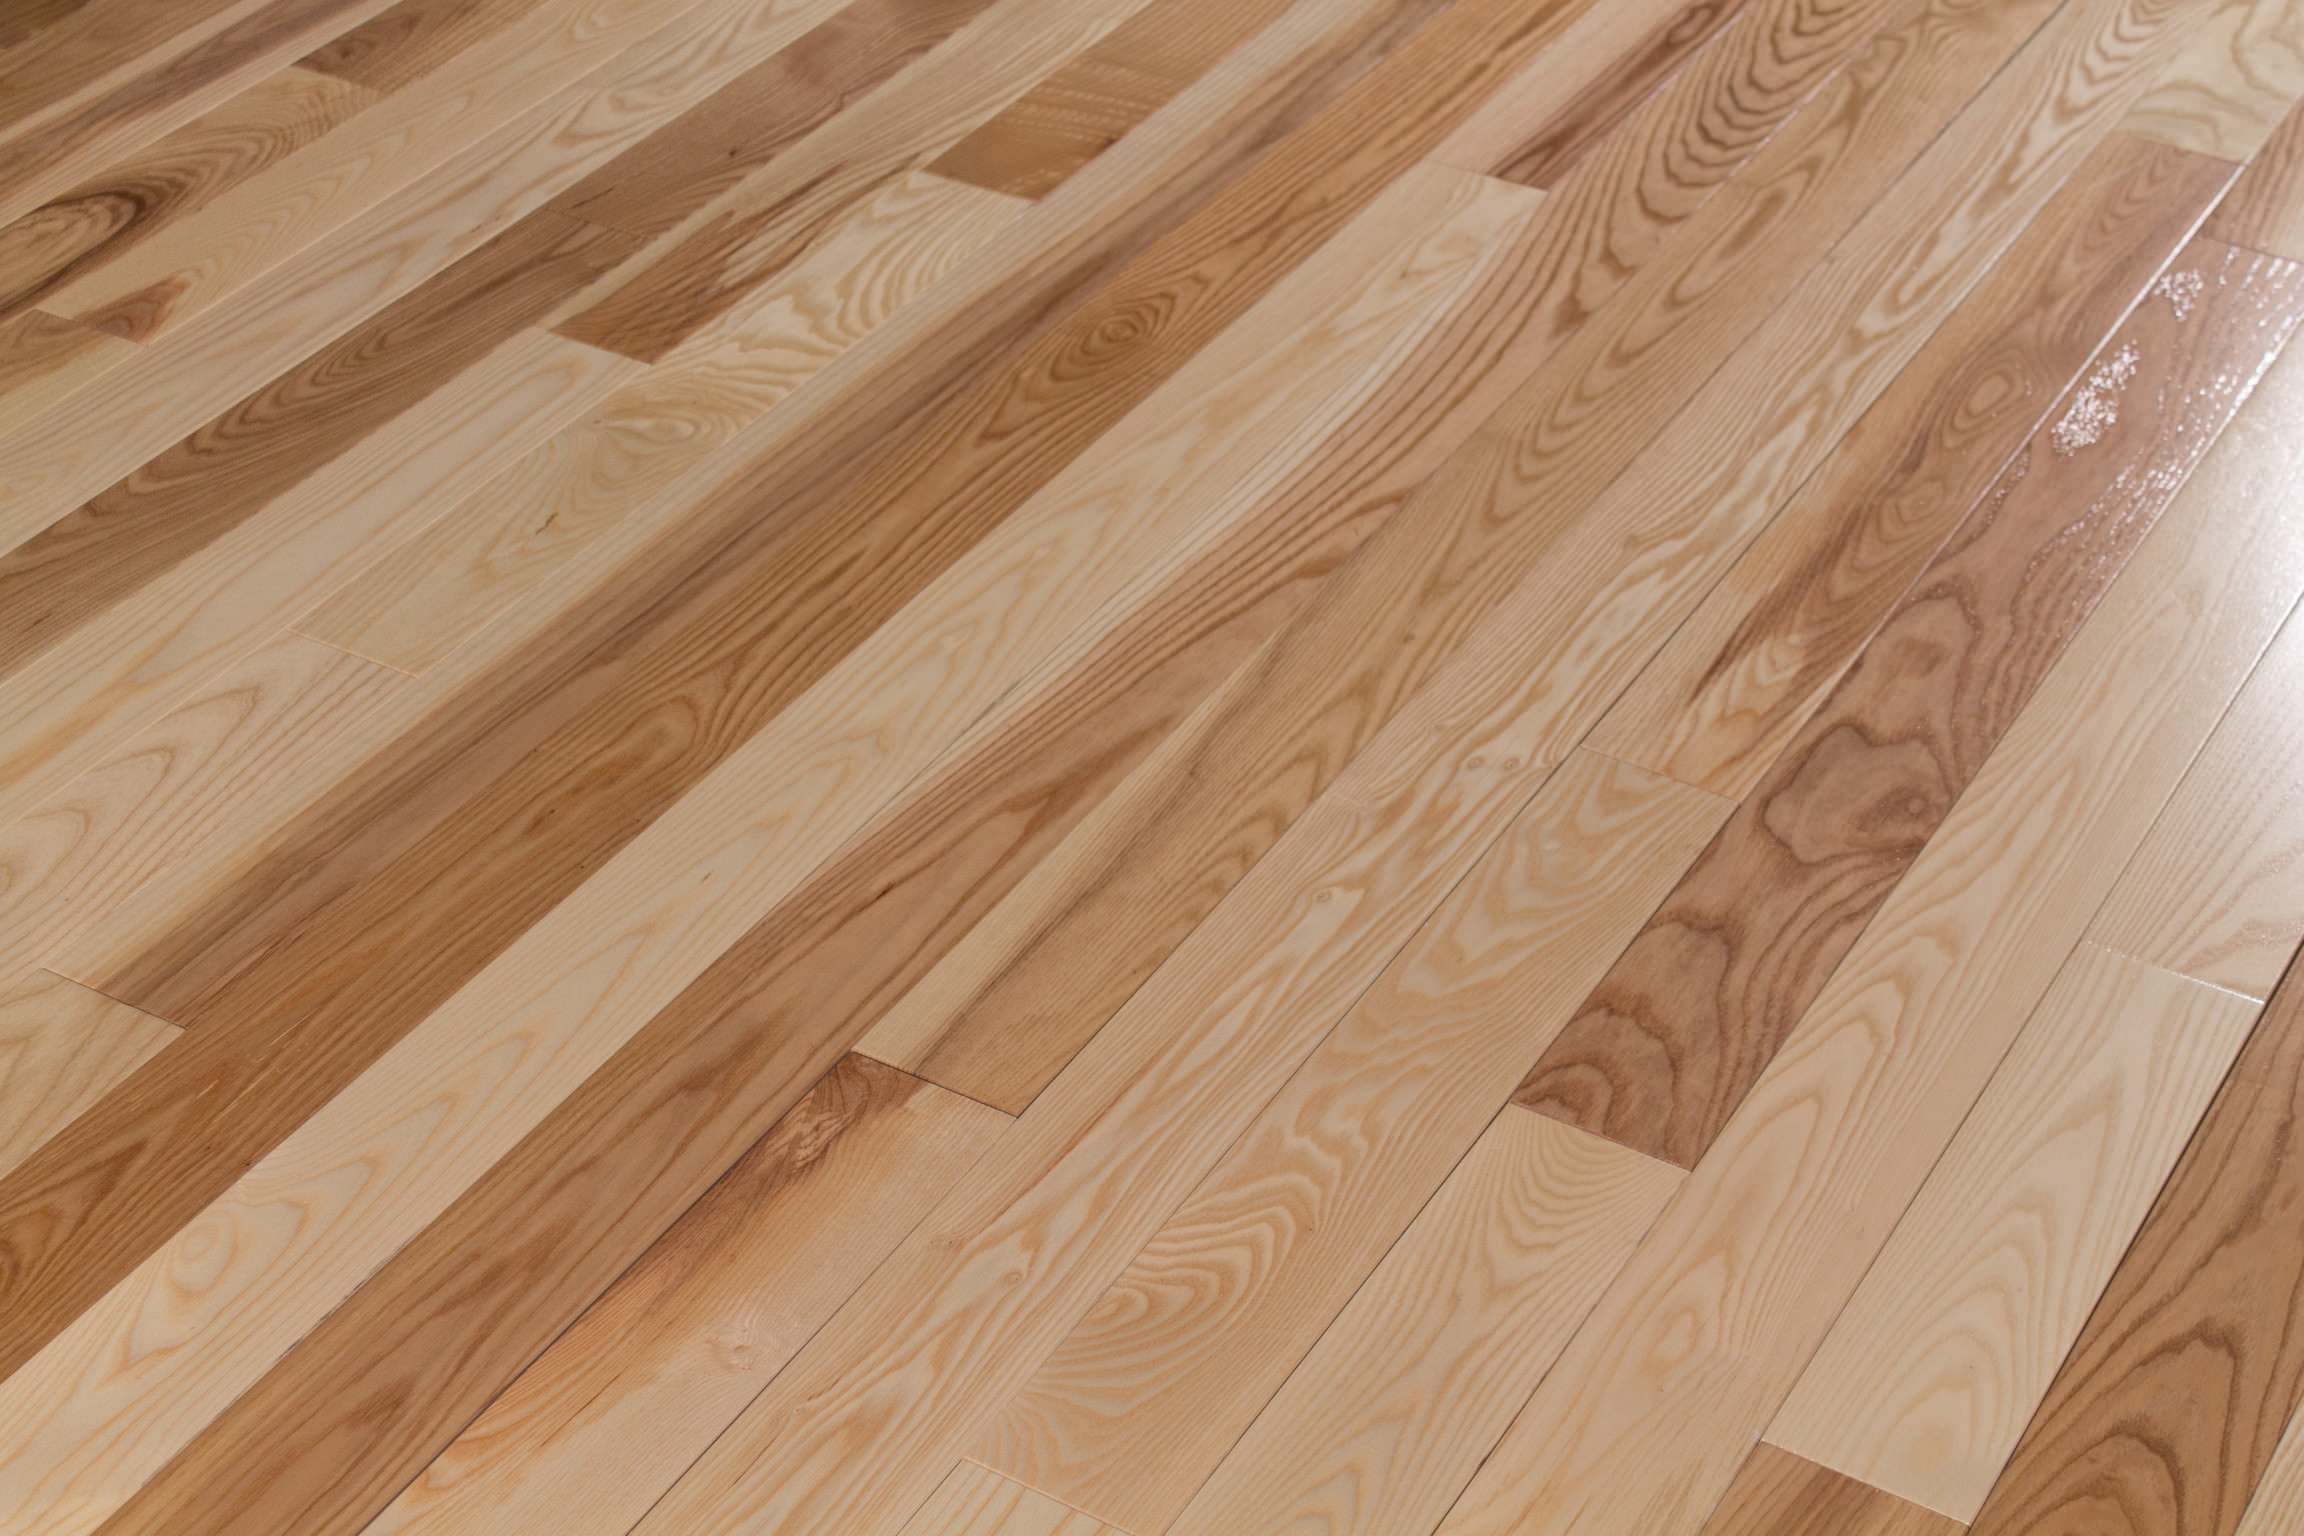 Domestic Hardwood Flooring Guide, Ash Hardwood Flooring Reviews